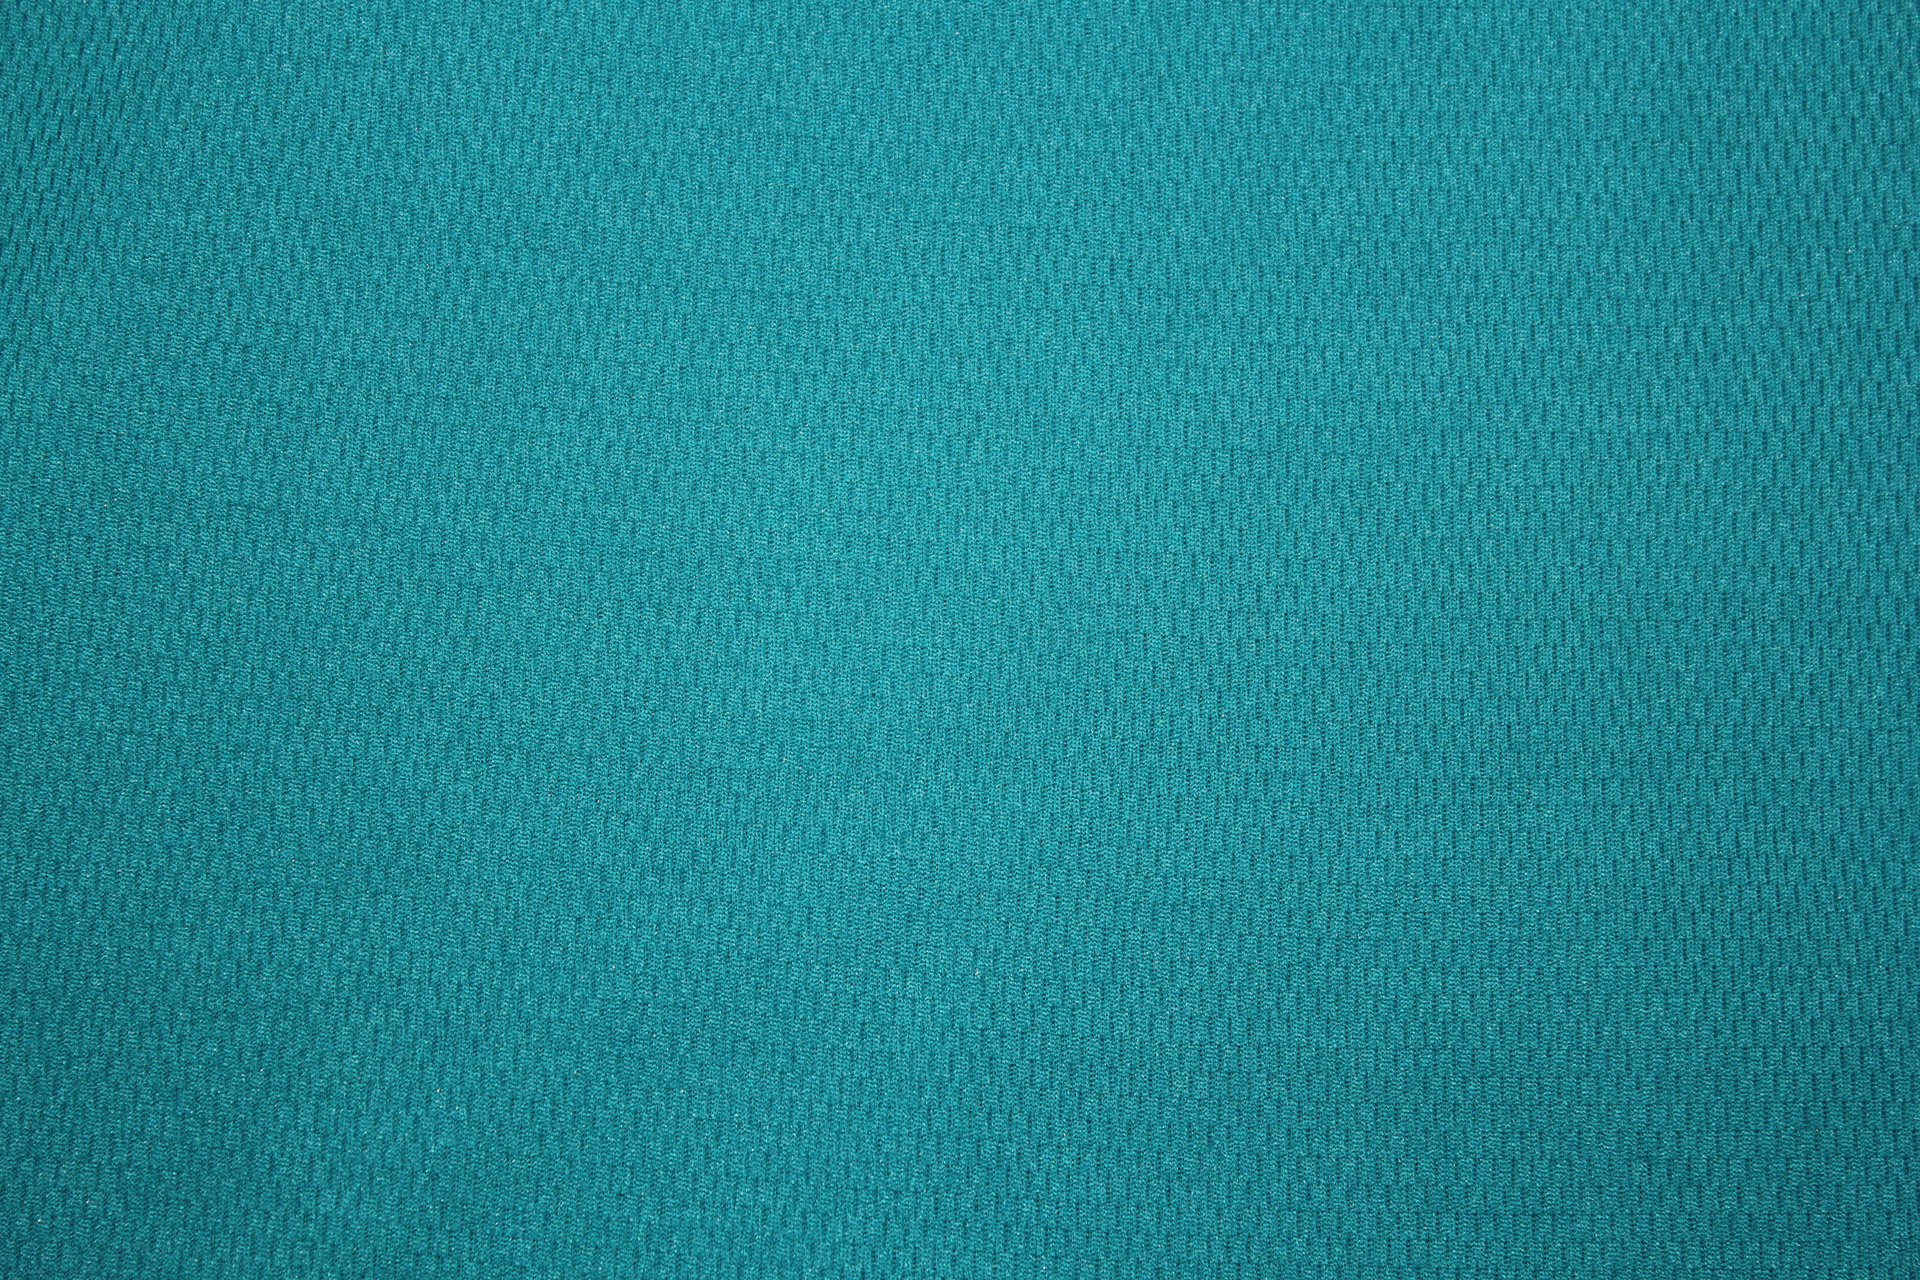 Blue Textile Background 4 Free Stock Photo - Public Domain Pictures